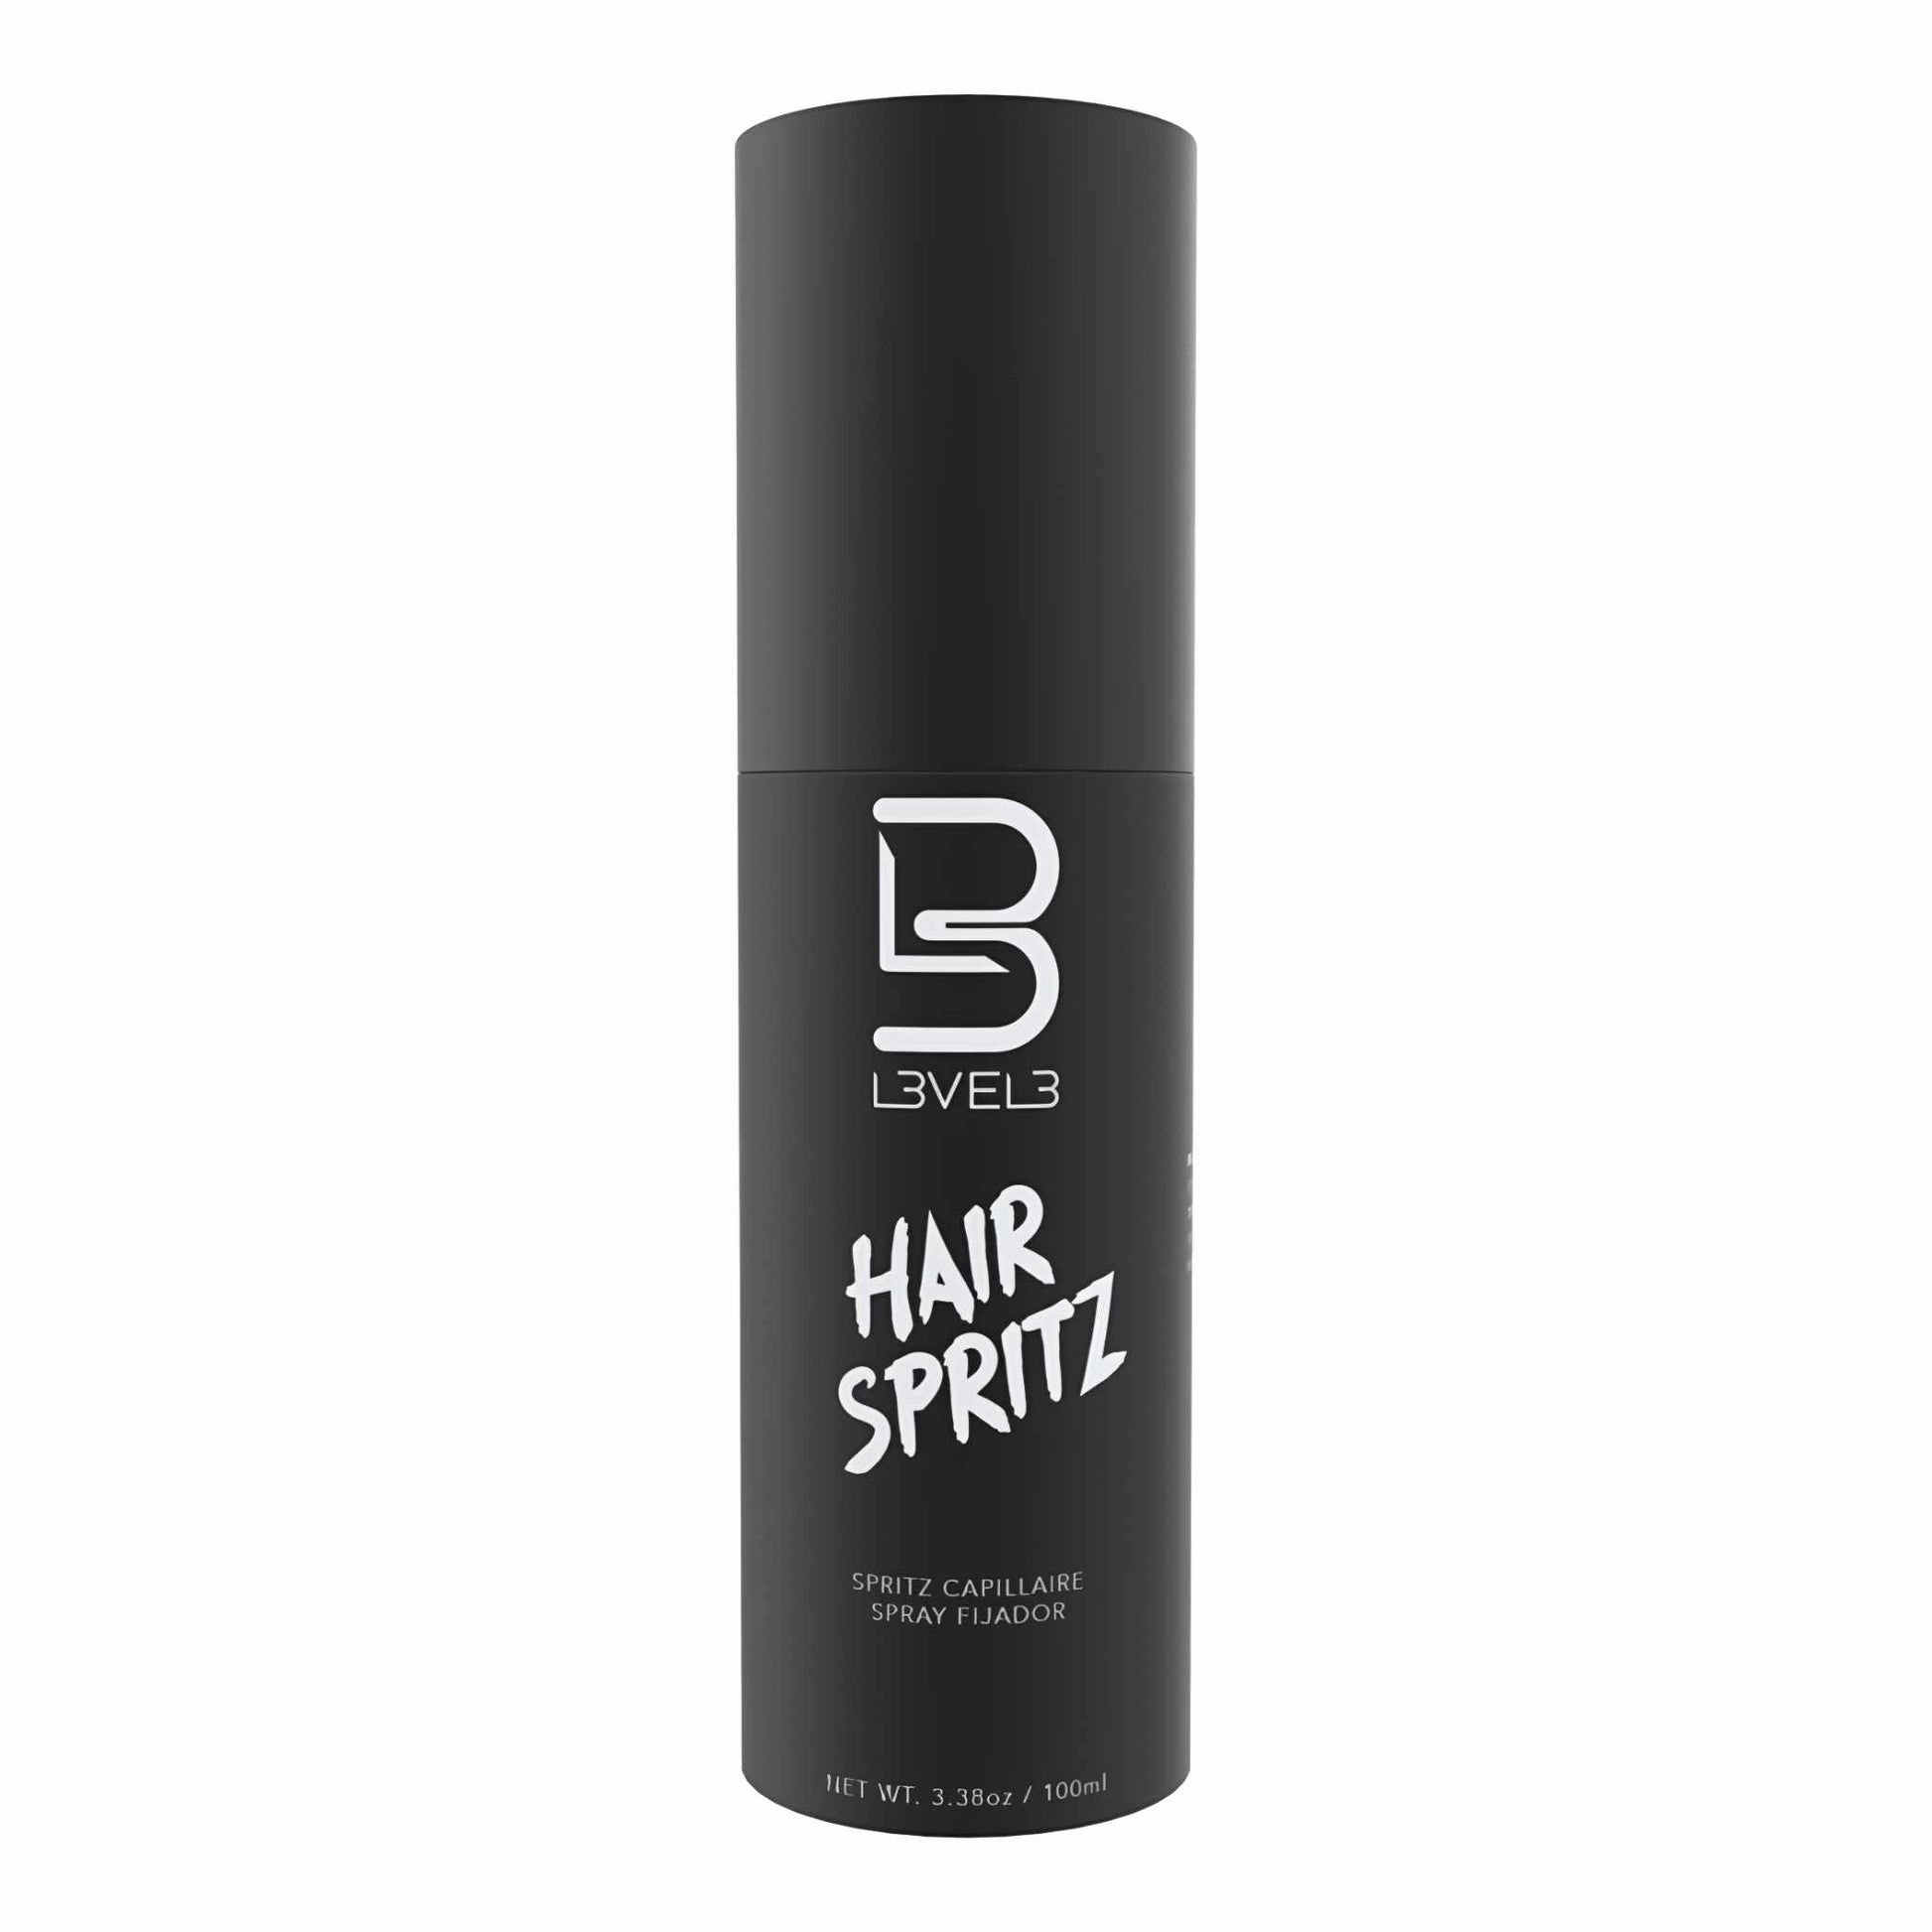 Level3 Hair Spritz Spray 100 ml